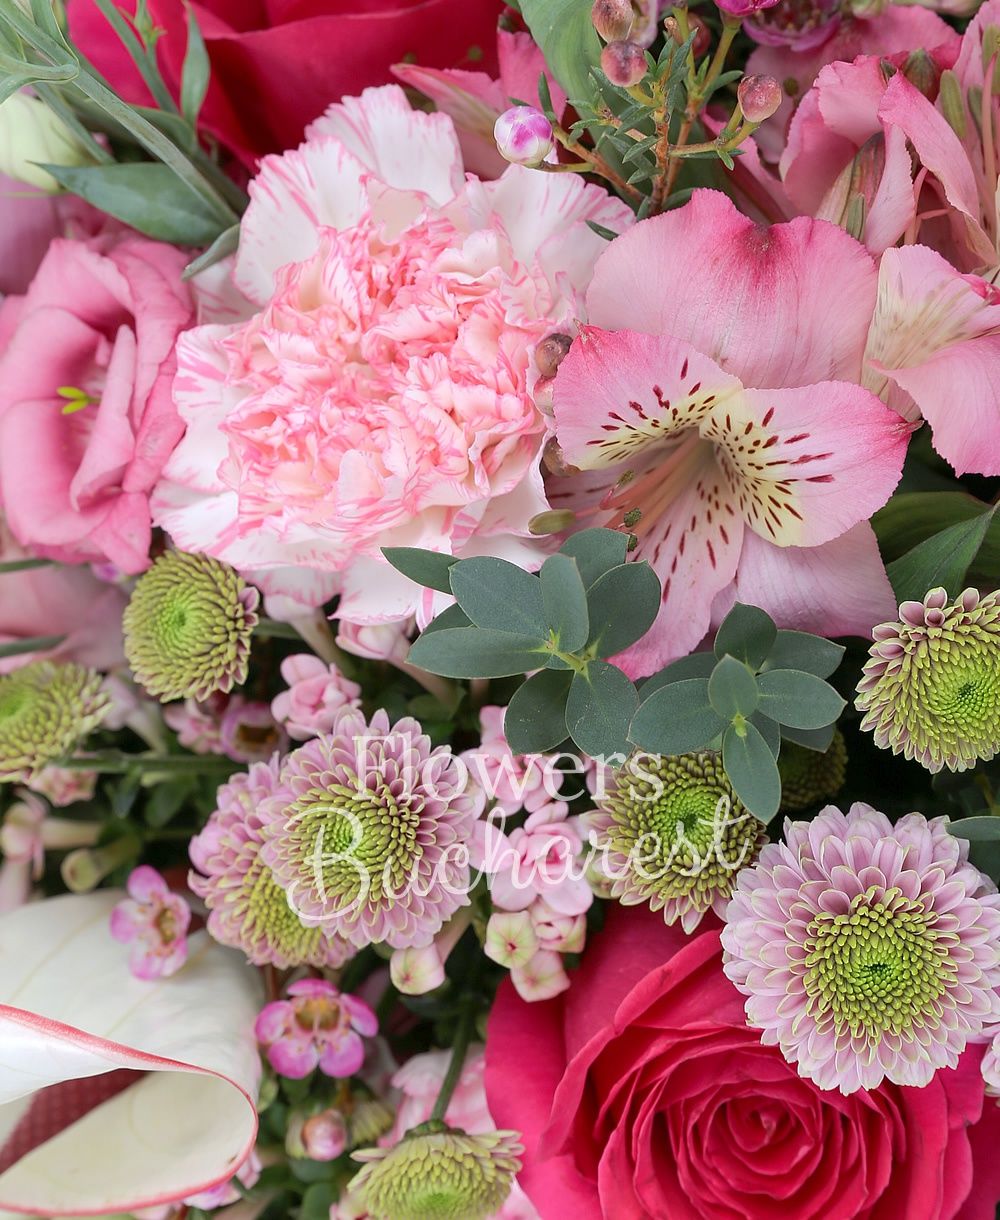 7 cyclam roses, 5 pink carnations, 5 pink santini, 5 pink bouvardia, 5 pink lisianthus, pink cymbidium, 2 white anthurium, 3 pink alstroemeria, greenery